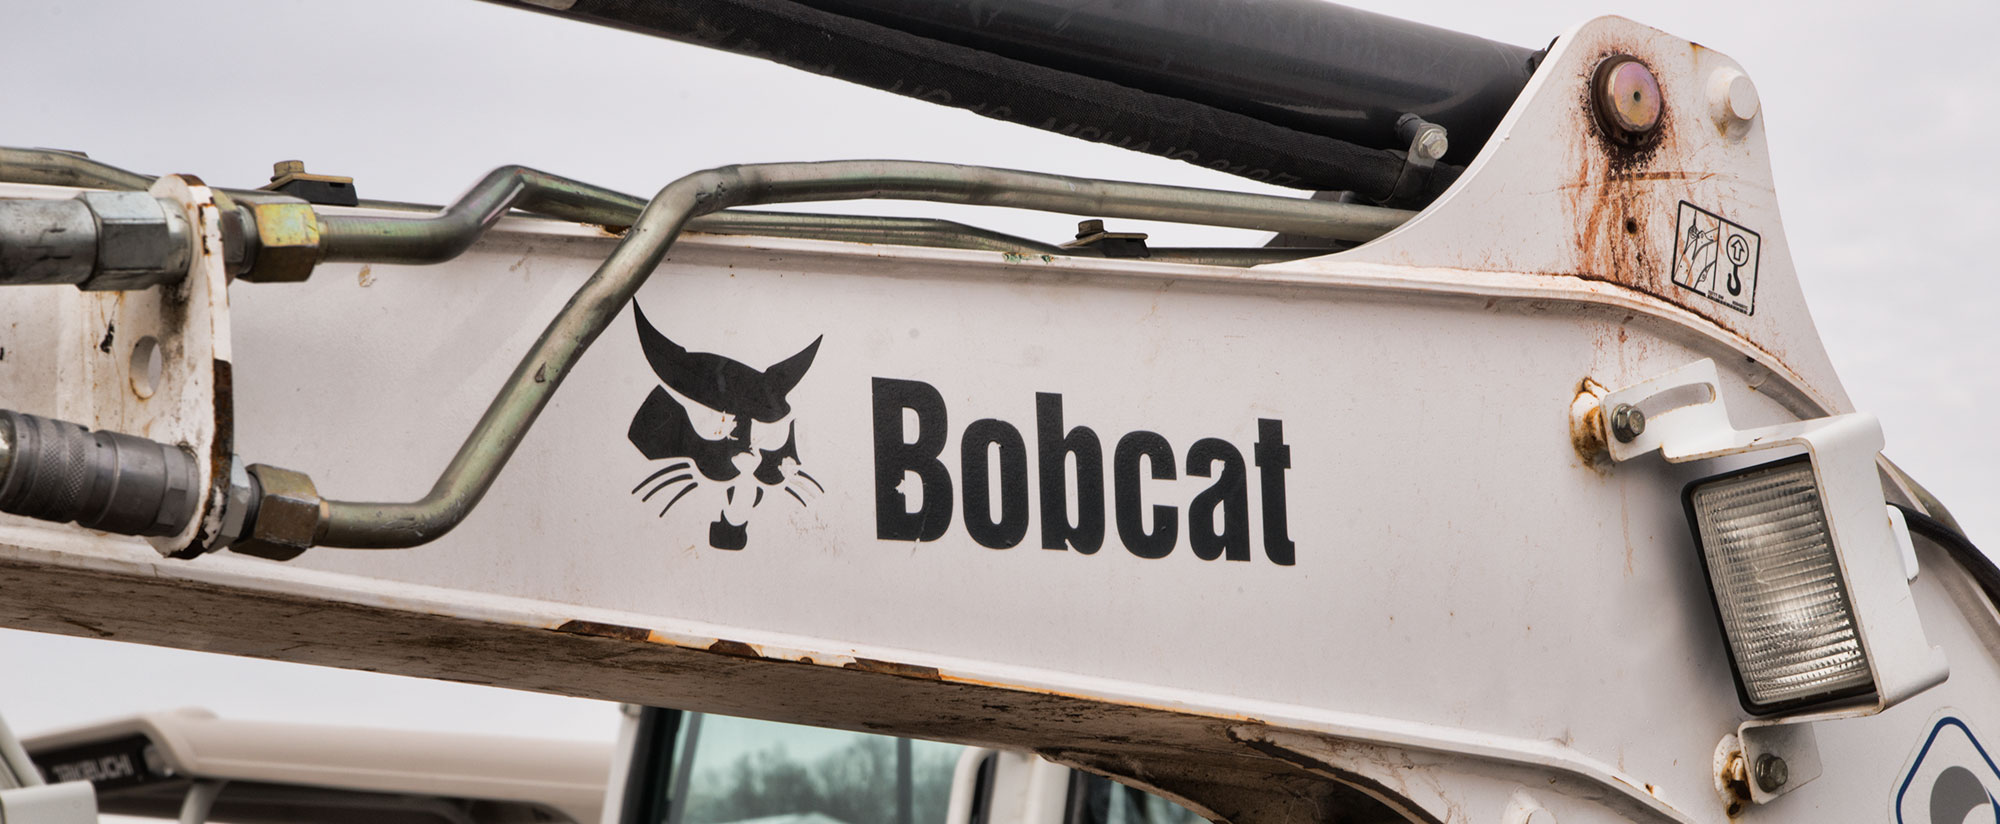 bhc-brand-bobcat.jpg